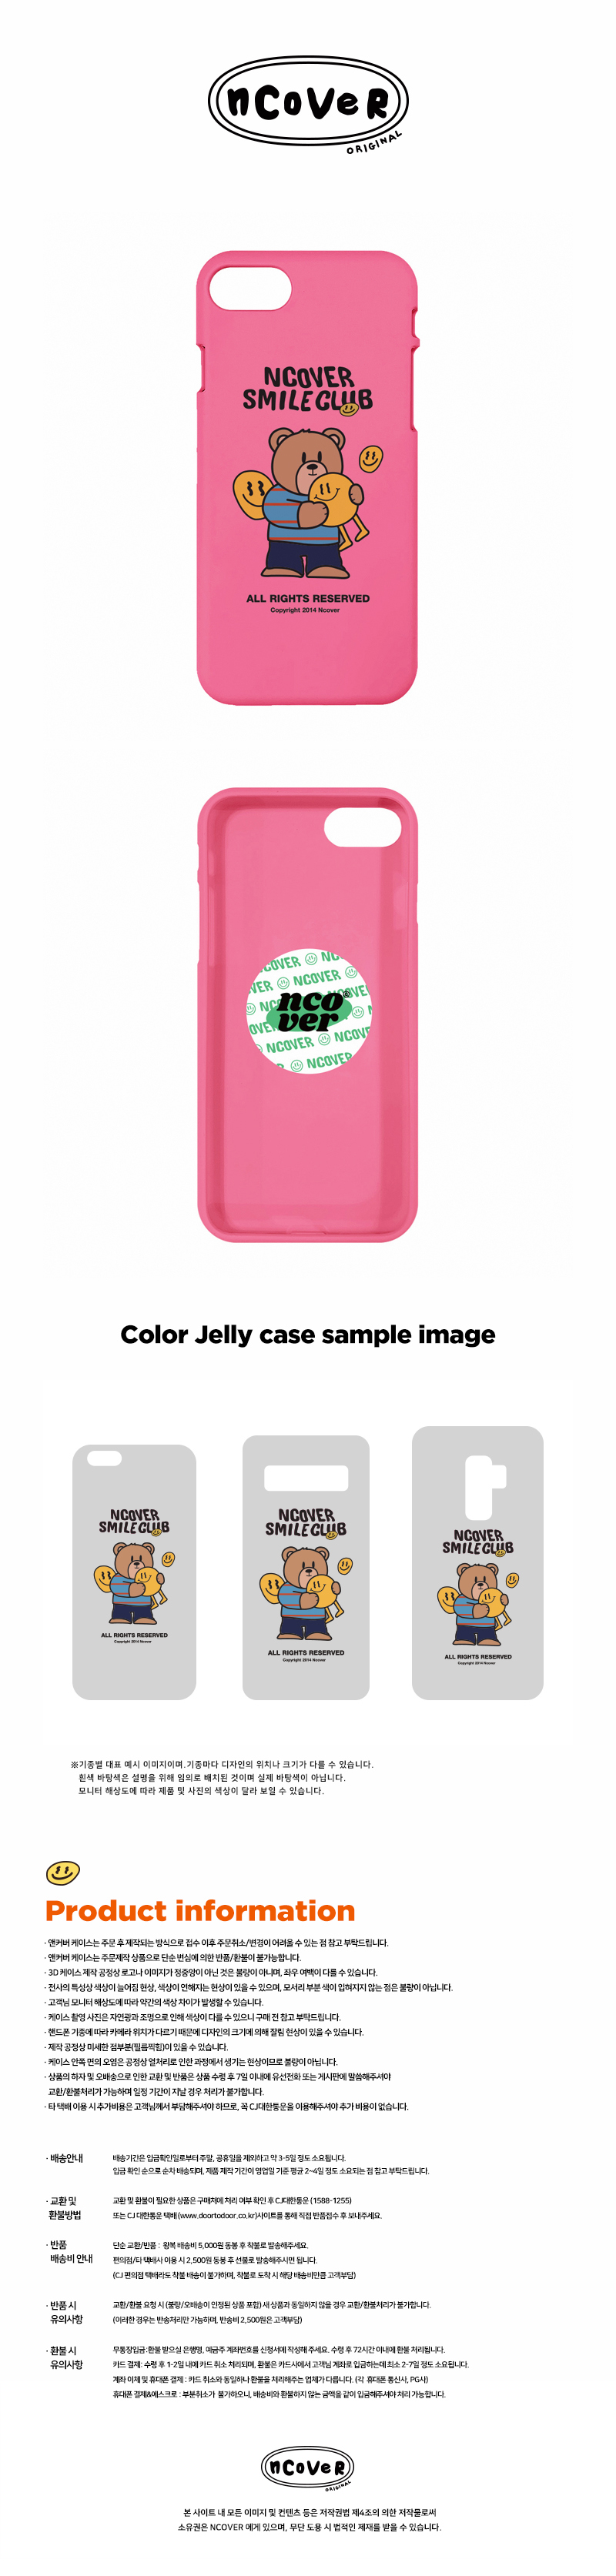  Smile ball bruin-pink(color jelly)  19,000원 - 바이인터내셔널주식회사 디지털, 모바일 액세서리, 휴대폰 케이스, 기타 스마트폰 바보사랑  Smile ball bruin-pink(color jelly)  19,000원 - 바이인터내셔널주식회사 디지털, 모바일 액세서리, 휴대폰 케이스, 기타 스마트폰 바보사랑